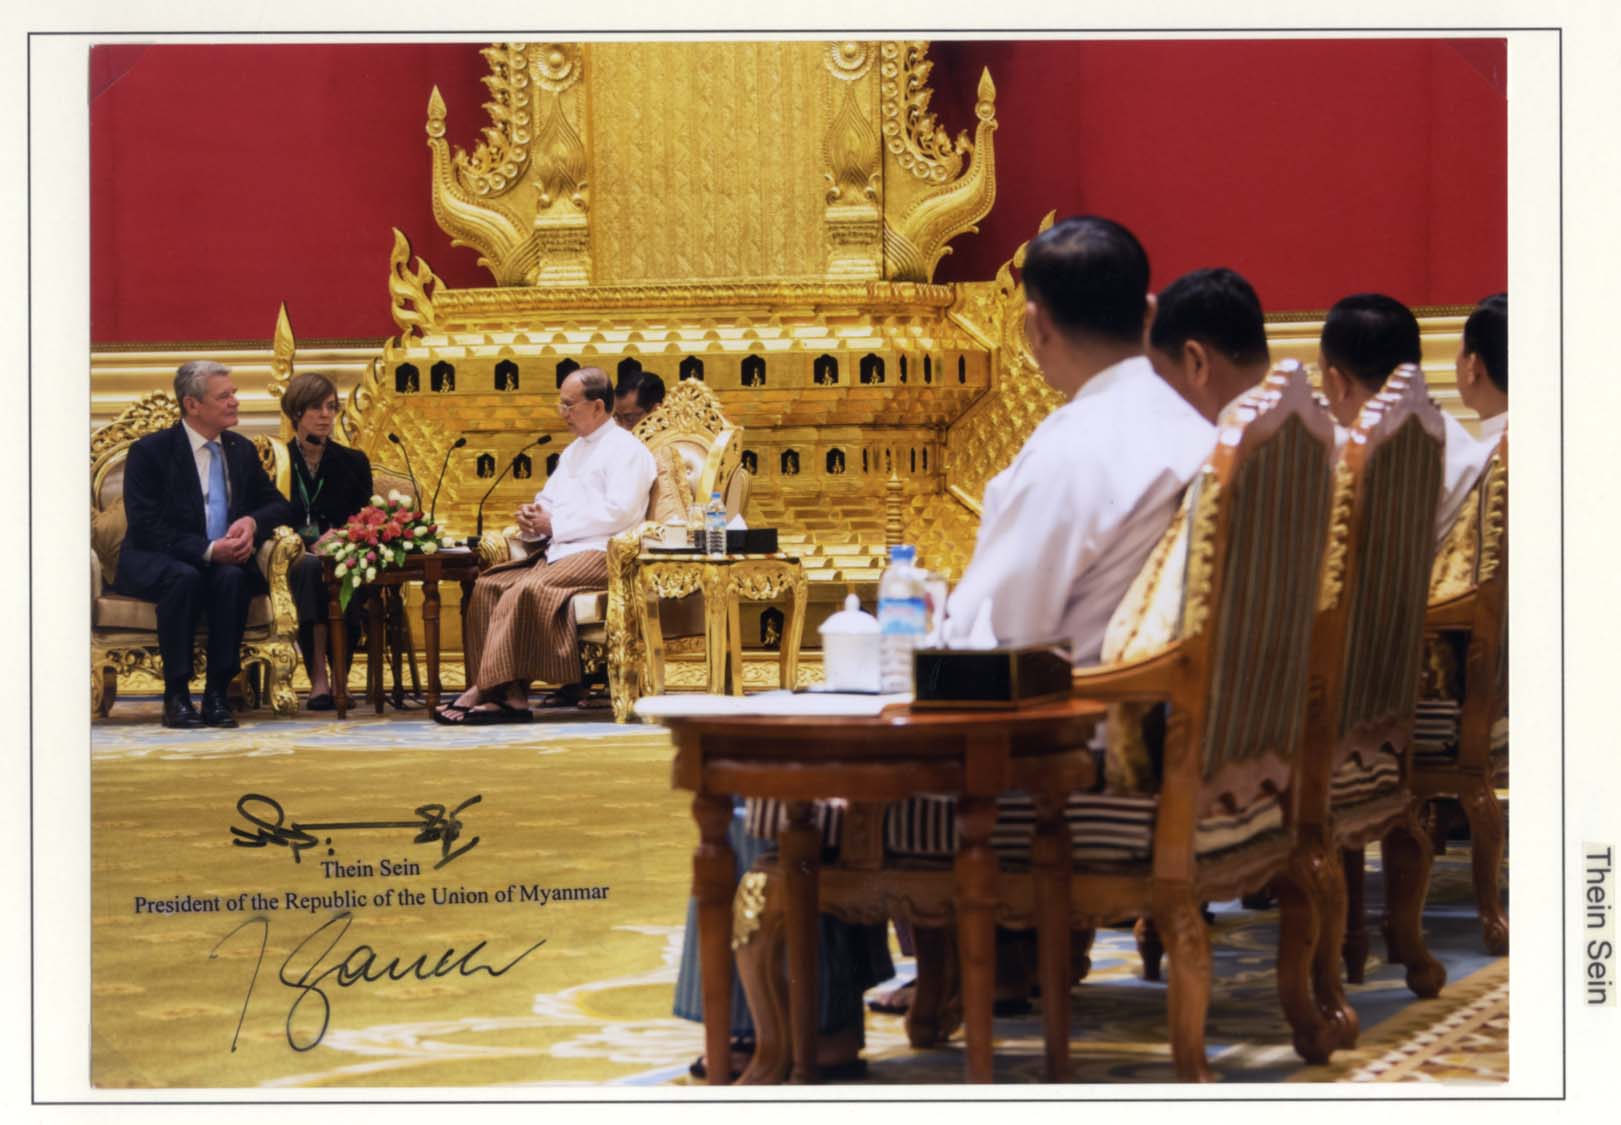  Nu &amp; Win &amp; San Kyi &amp; Others Autograph Autogramm | ID 7959553736853